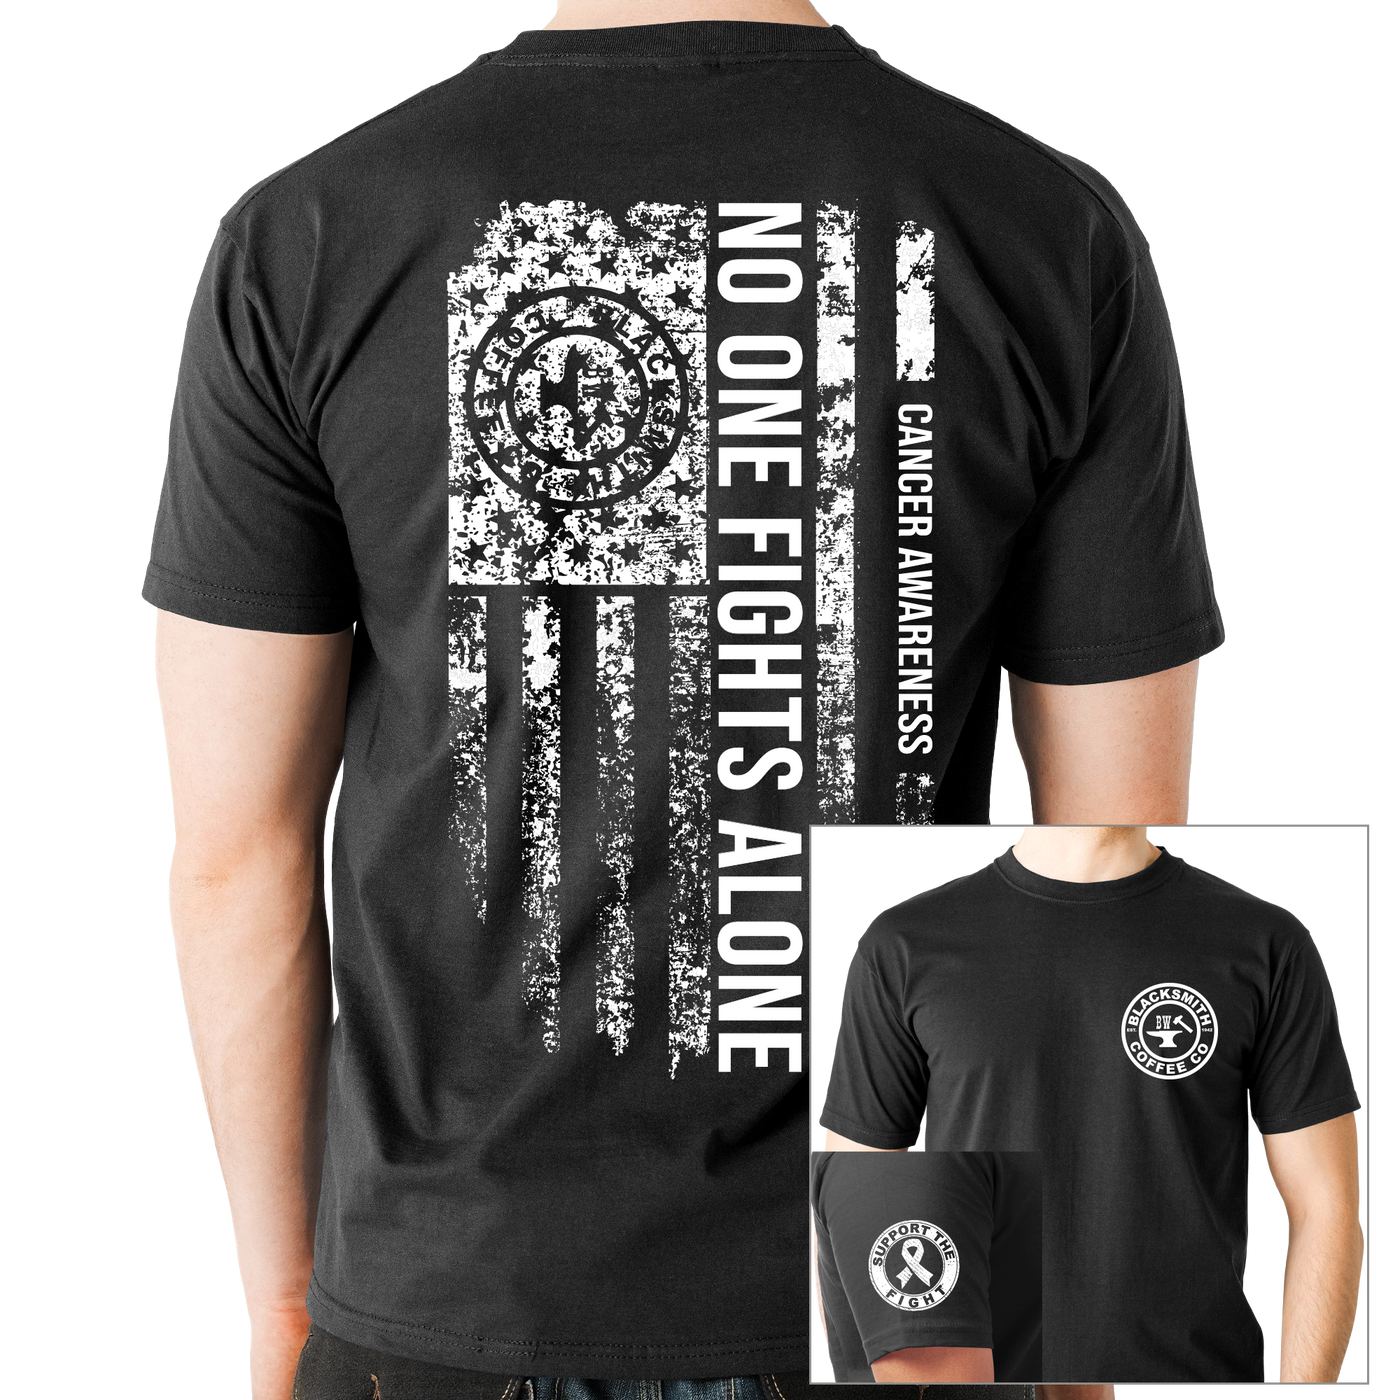 BW Blacksmith (No One Fights Alone: Cancer Awareness) Cotton T-Shirt: Black